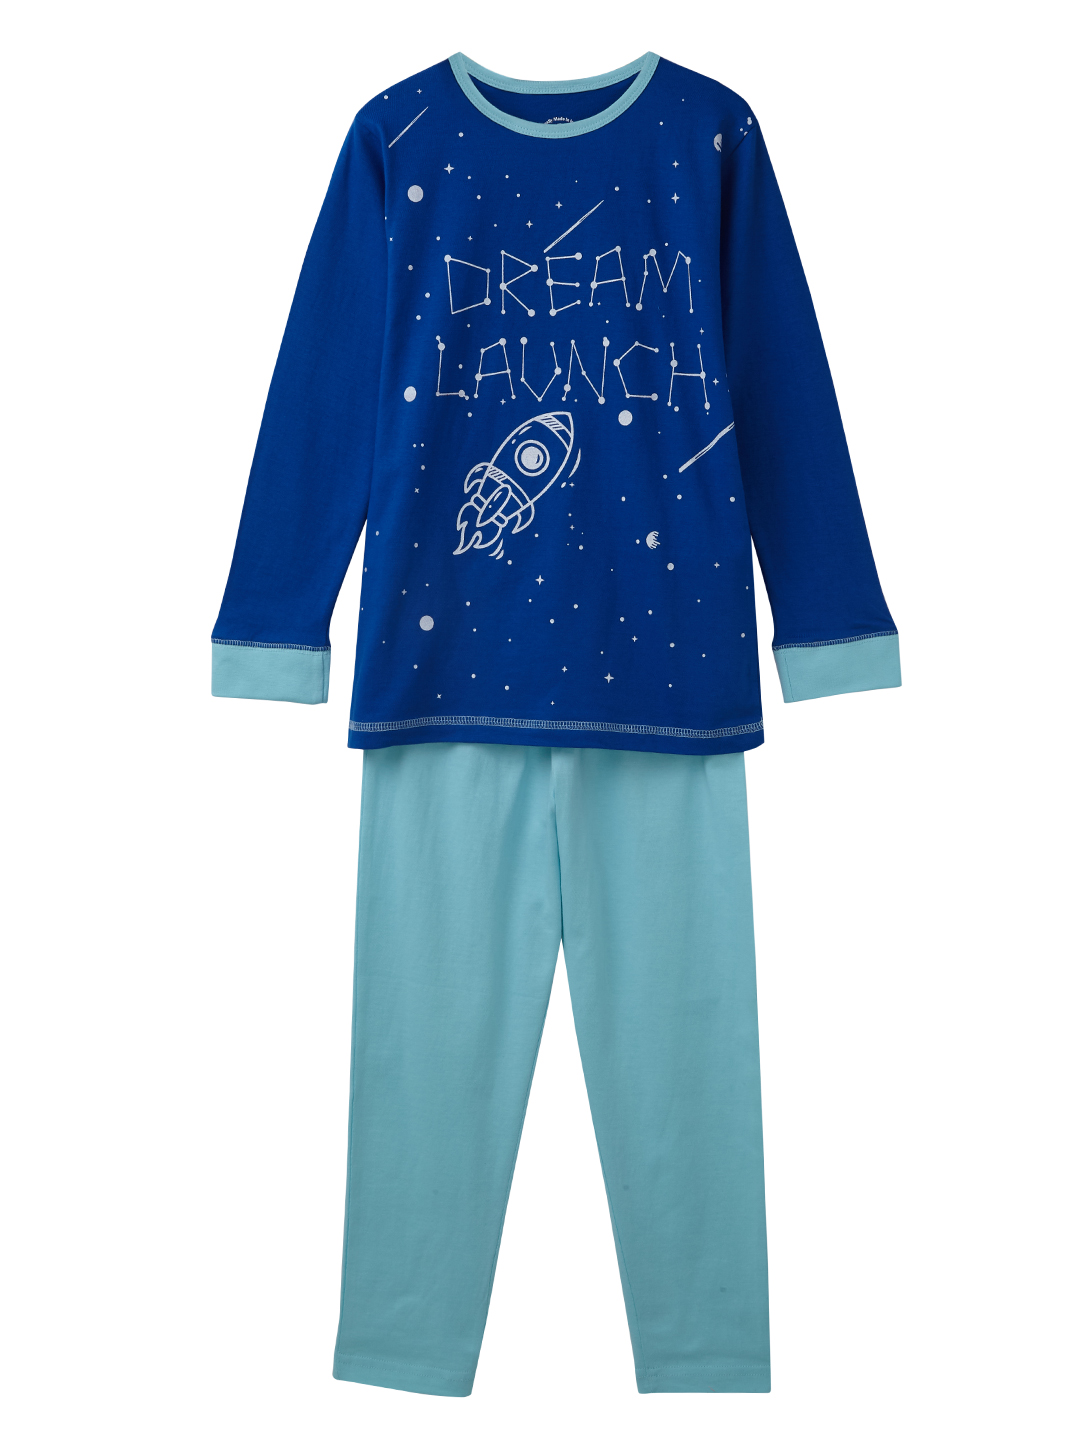 Boys Sleepwear Set - Blue full sleeve tee with Dream launch print and contrast pyjama (EOSS)